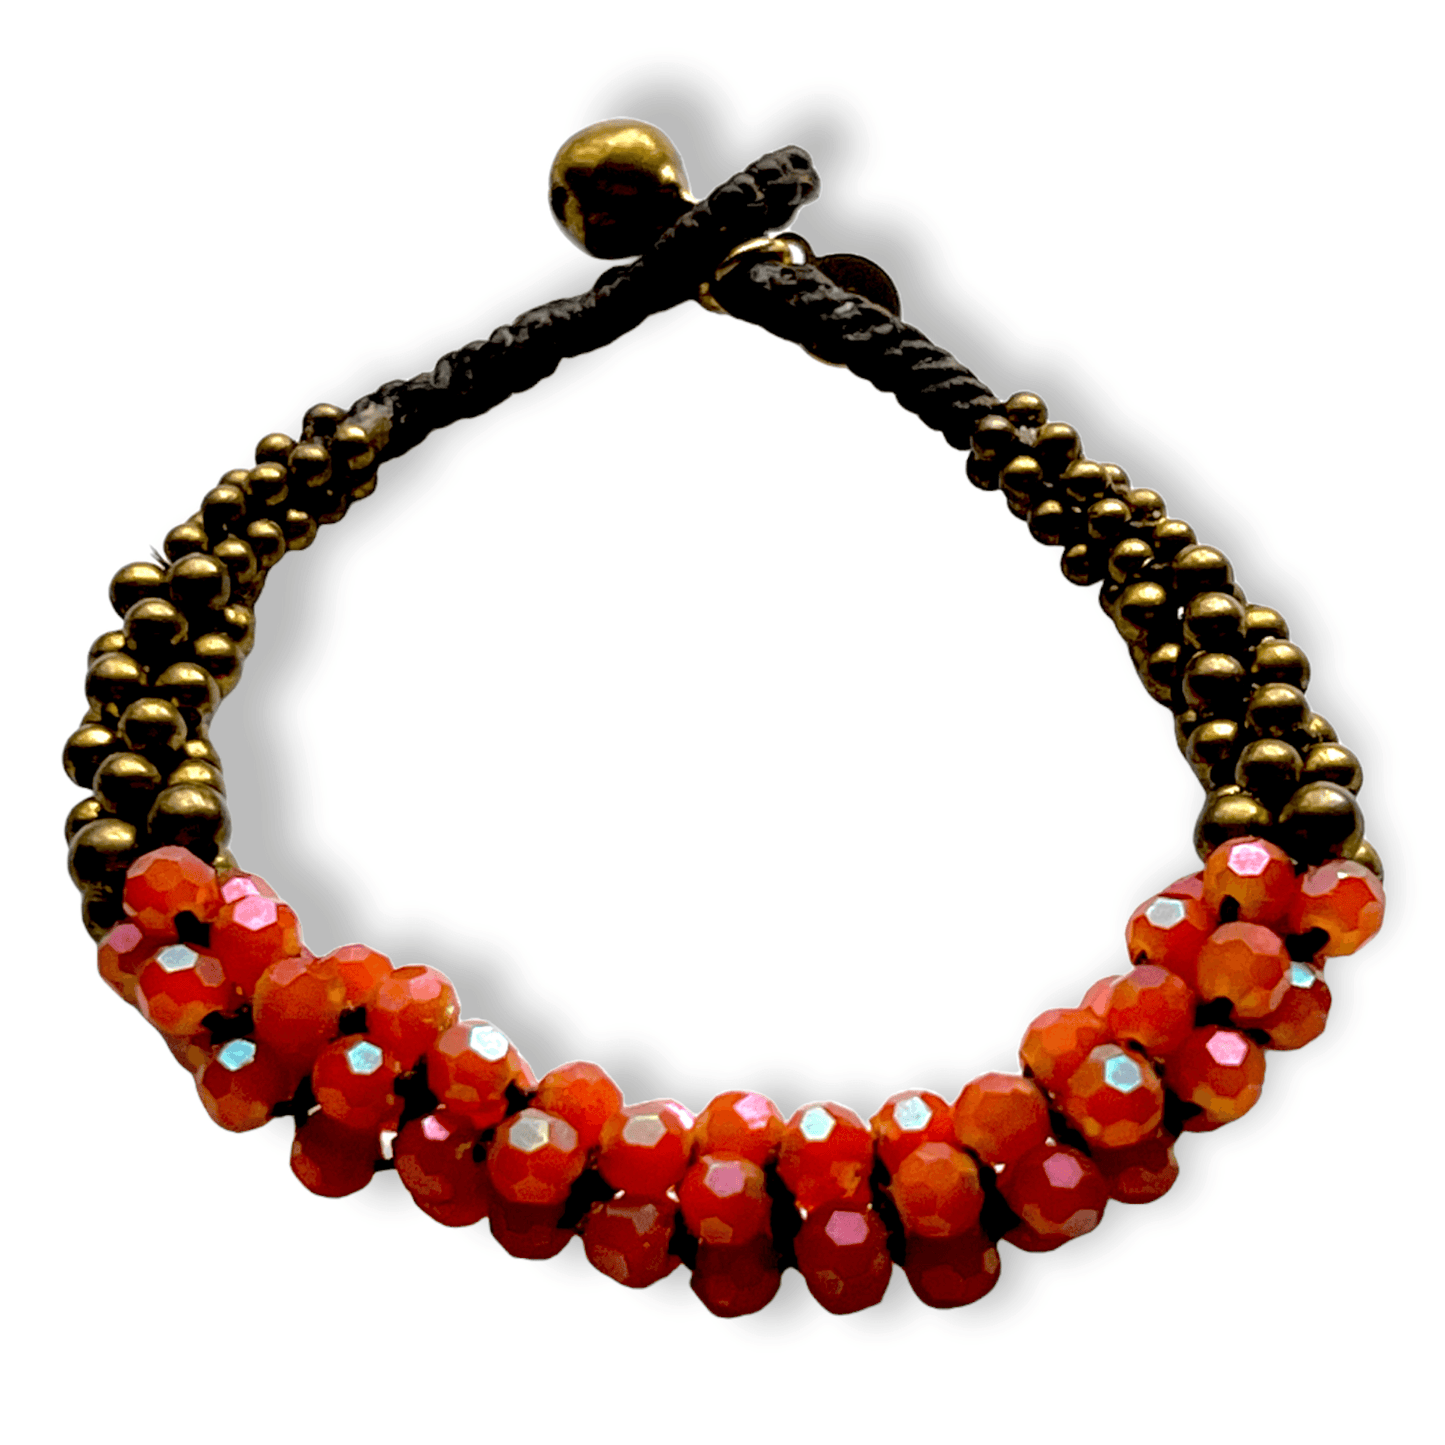 Tribal beaded bracelet with bell - Sundara Joon